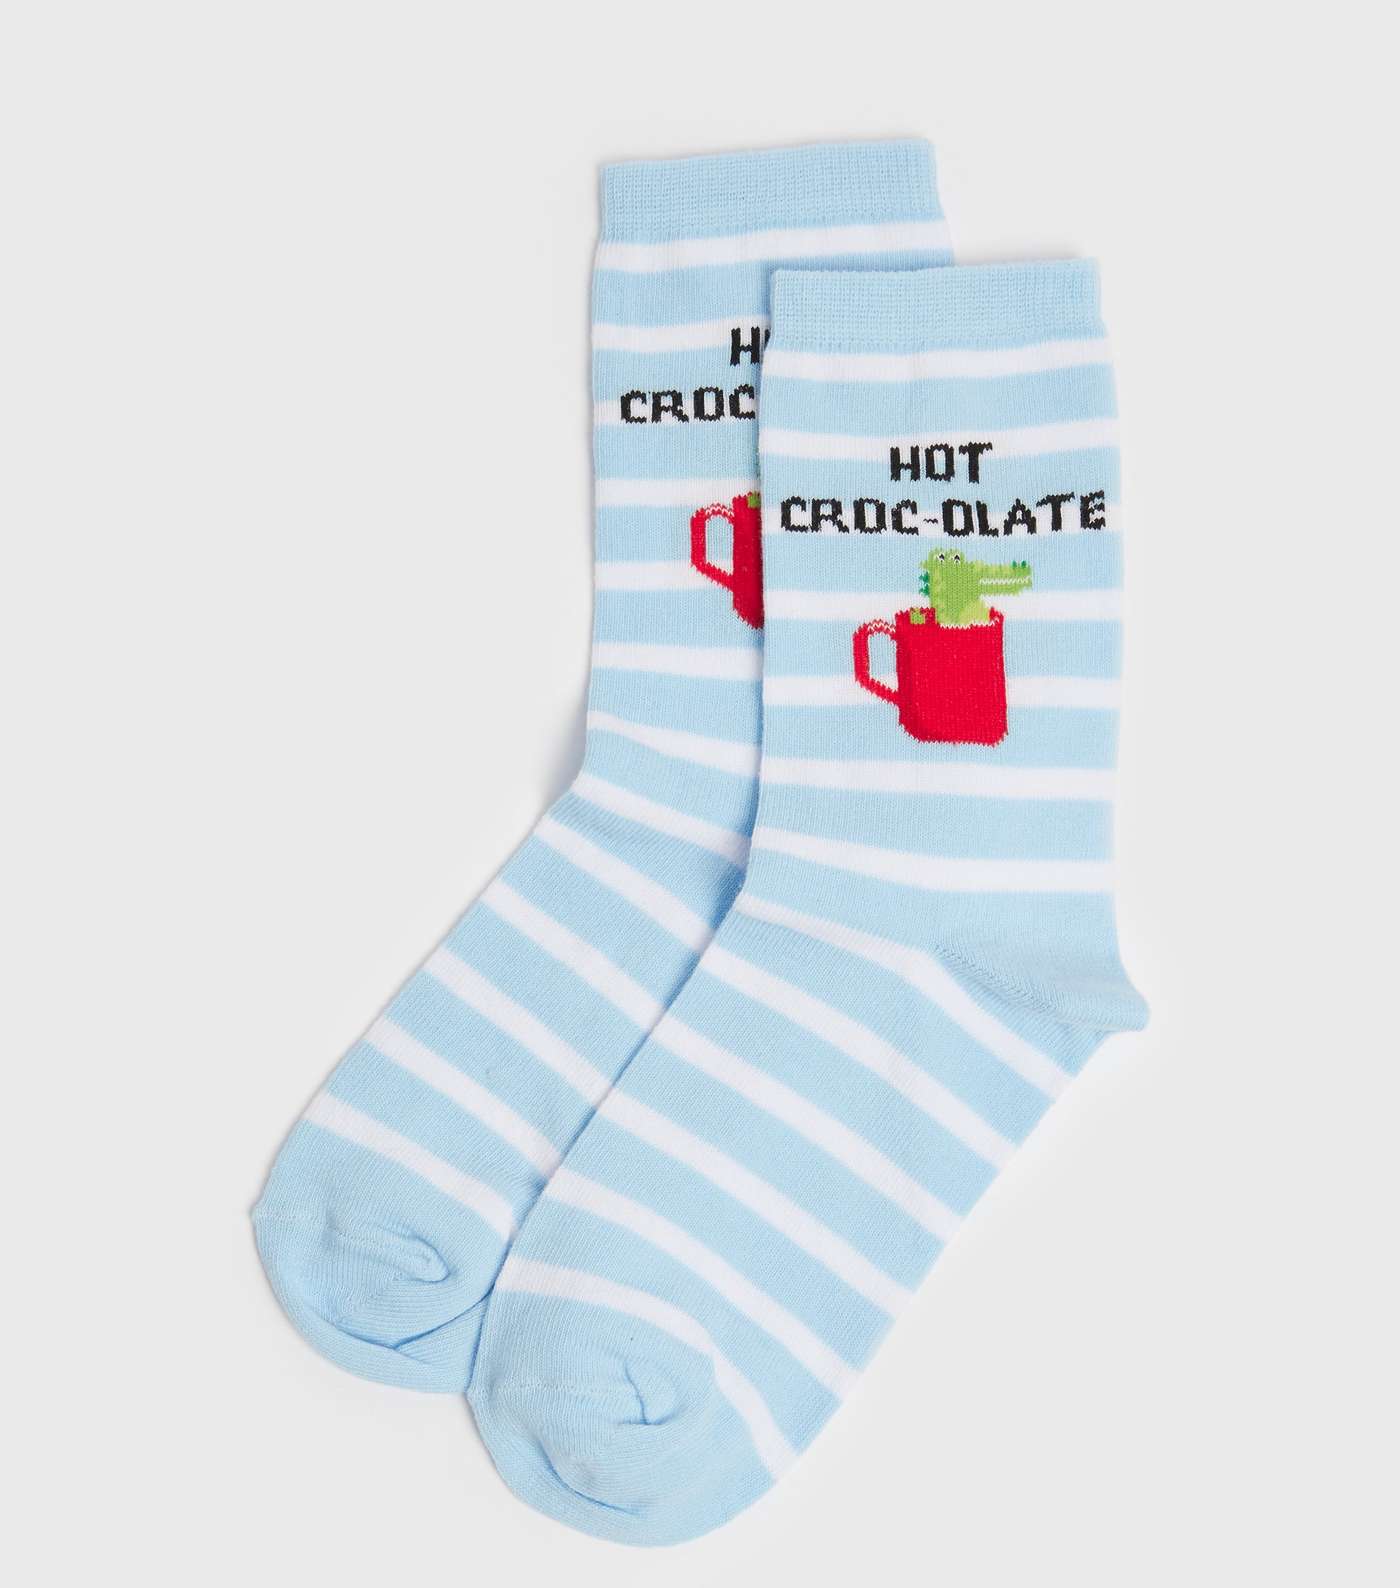 Pale Blue Stripe Hot Croc-olate Socks